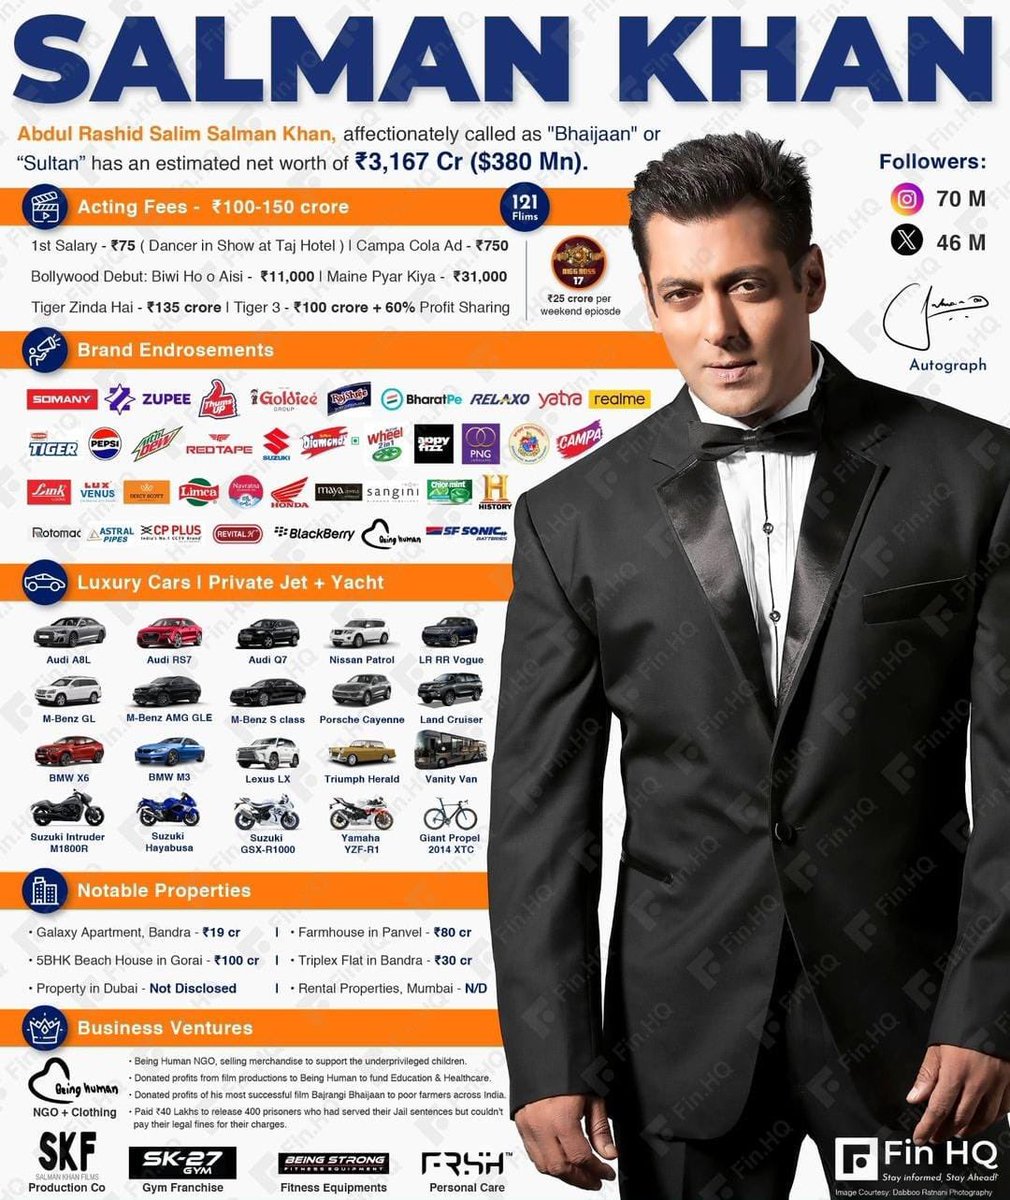 #SalmanKhan rules! Net worth 3167 Cr🔥